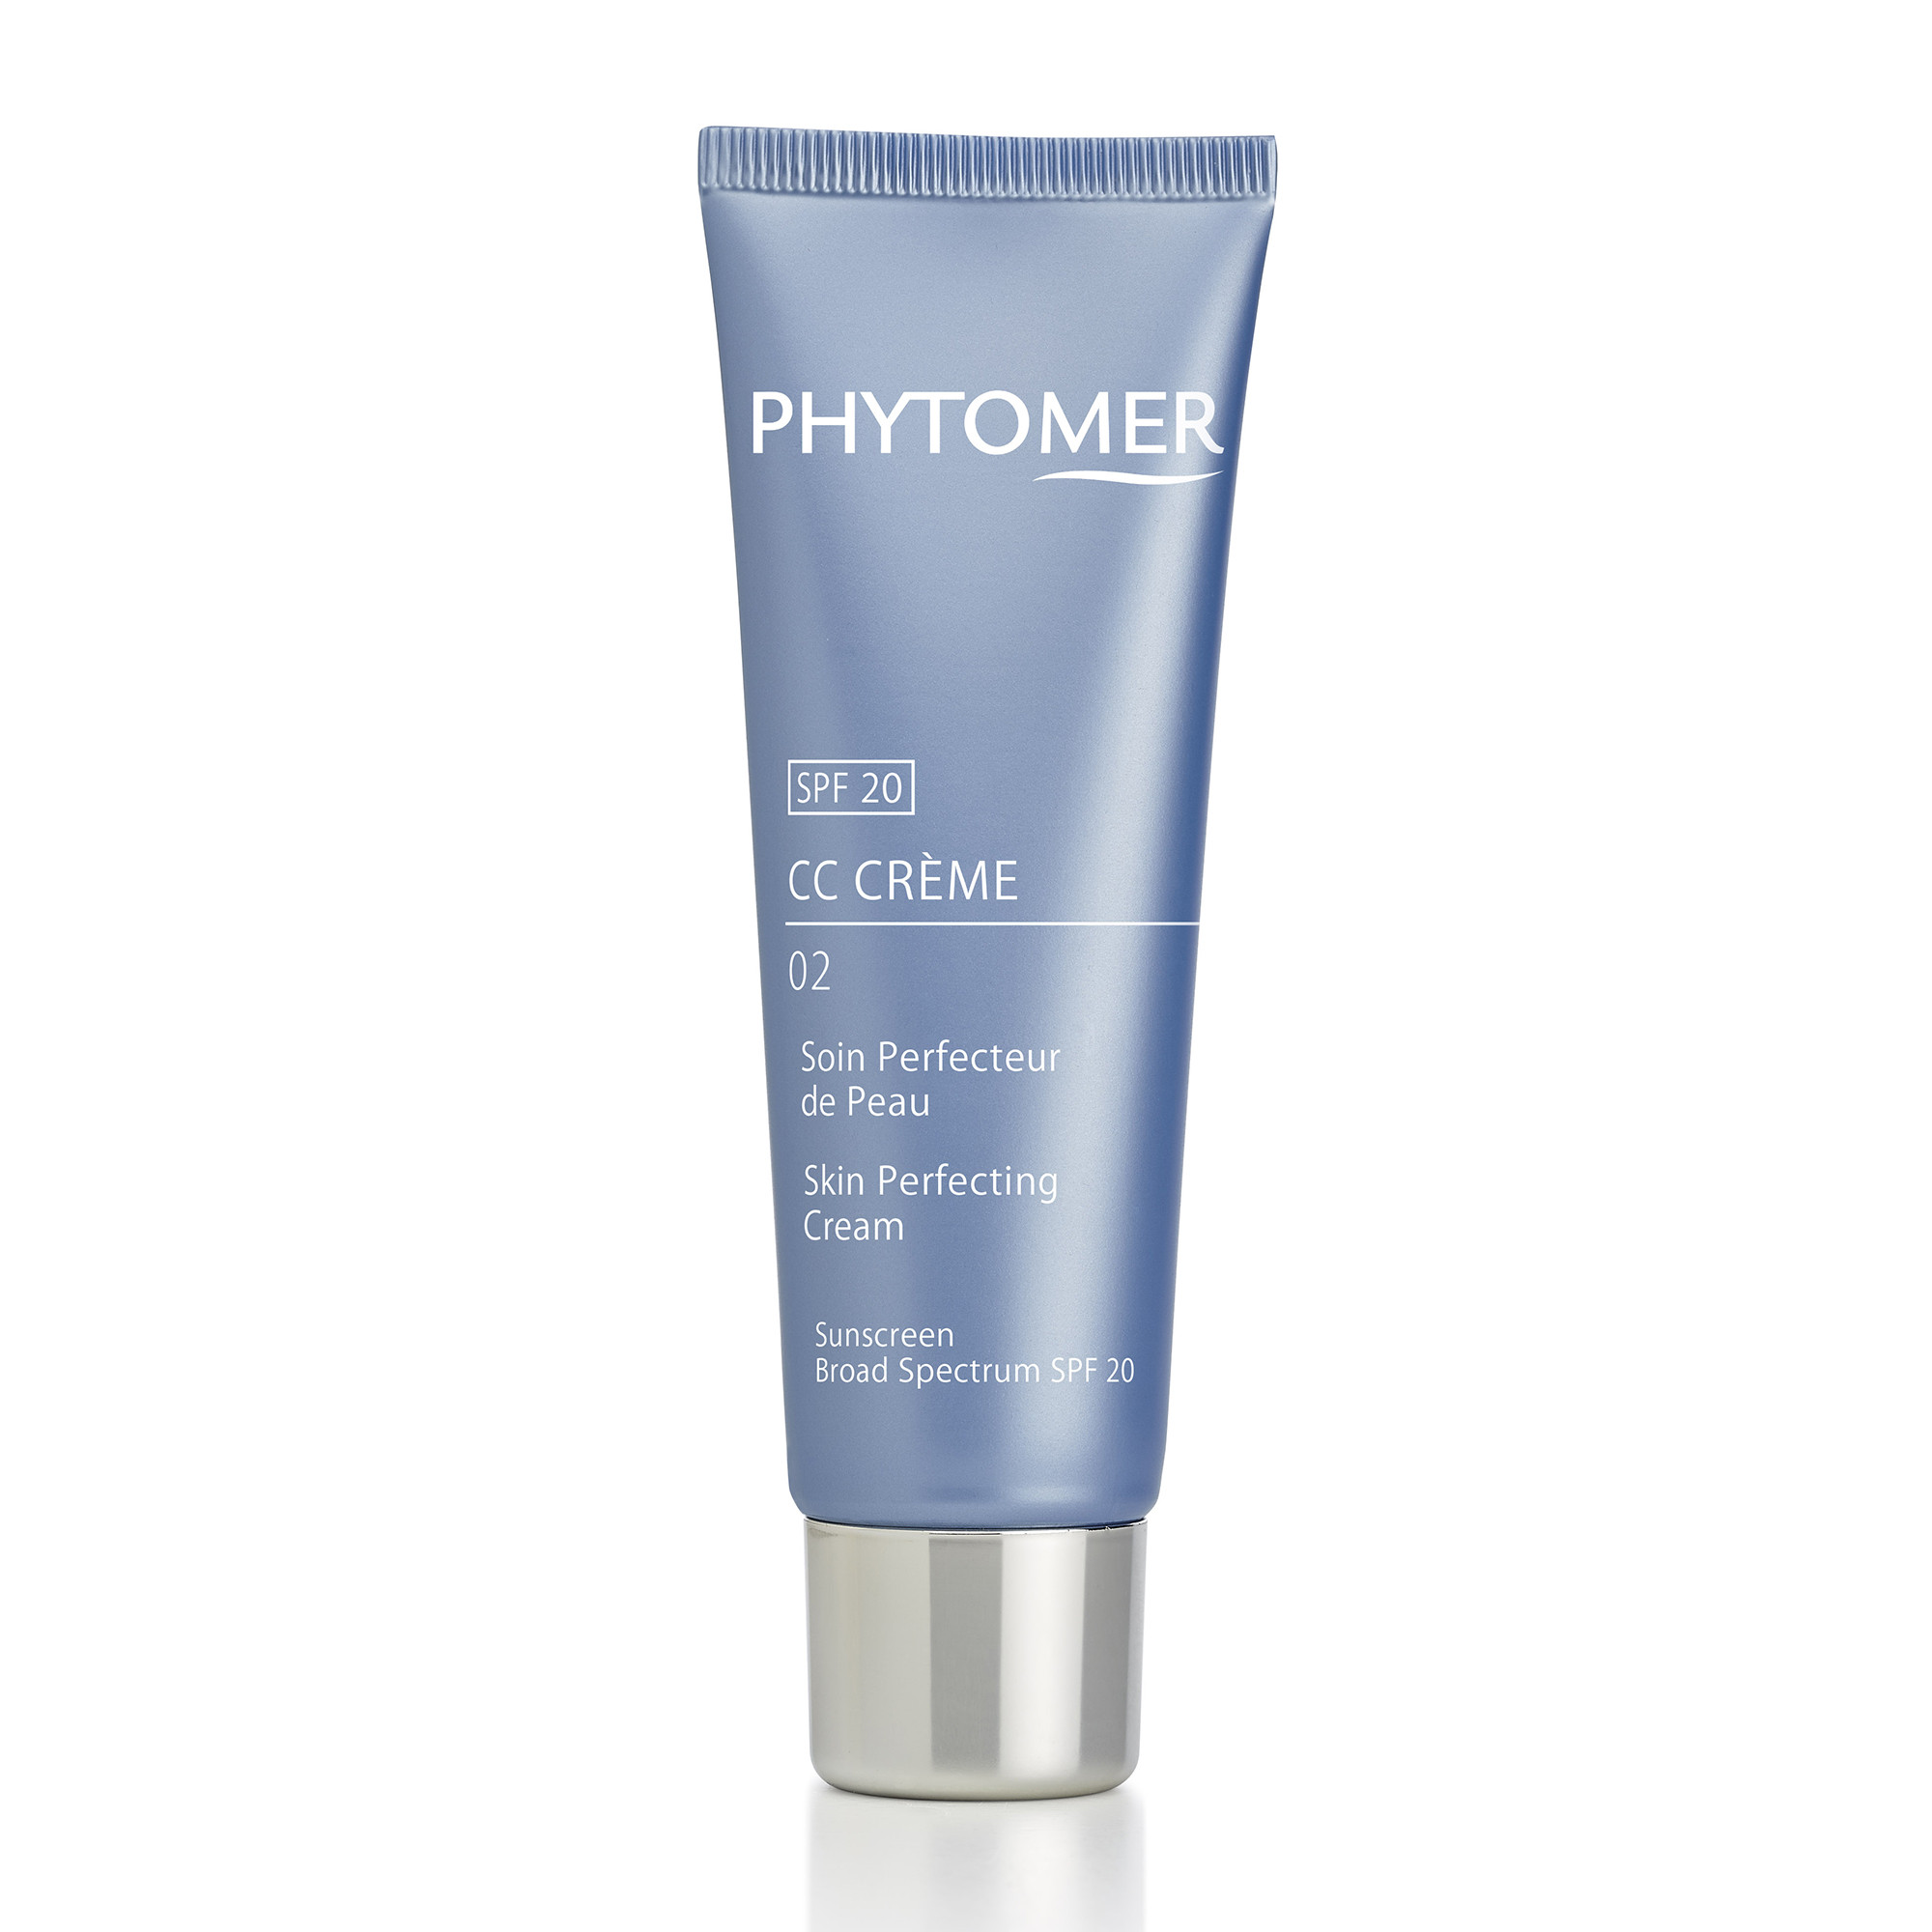 Phytomer СС Creme Skin Perfecting Cream 02 - СС-крем для лица